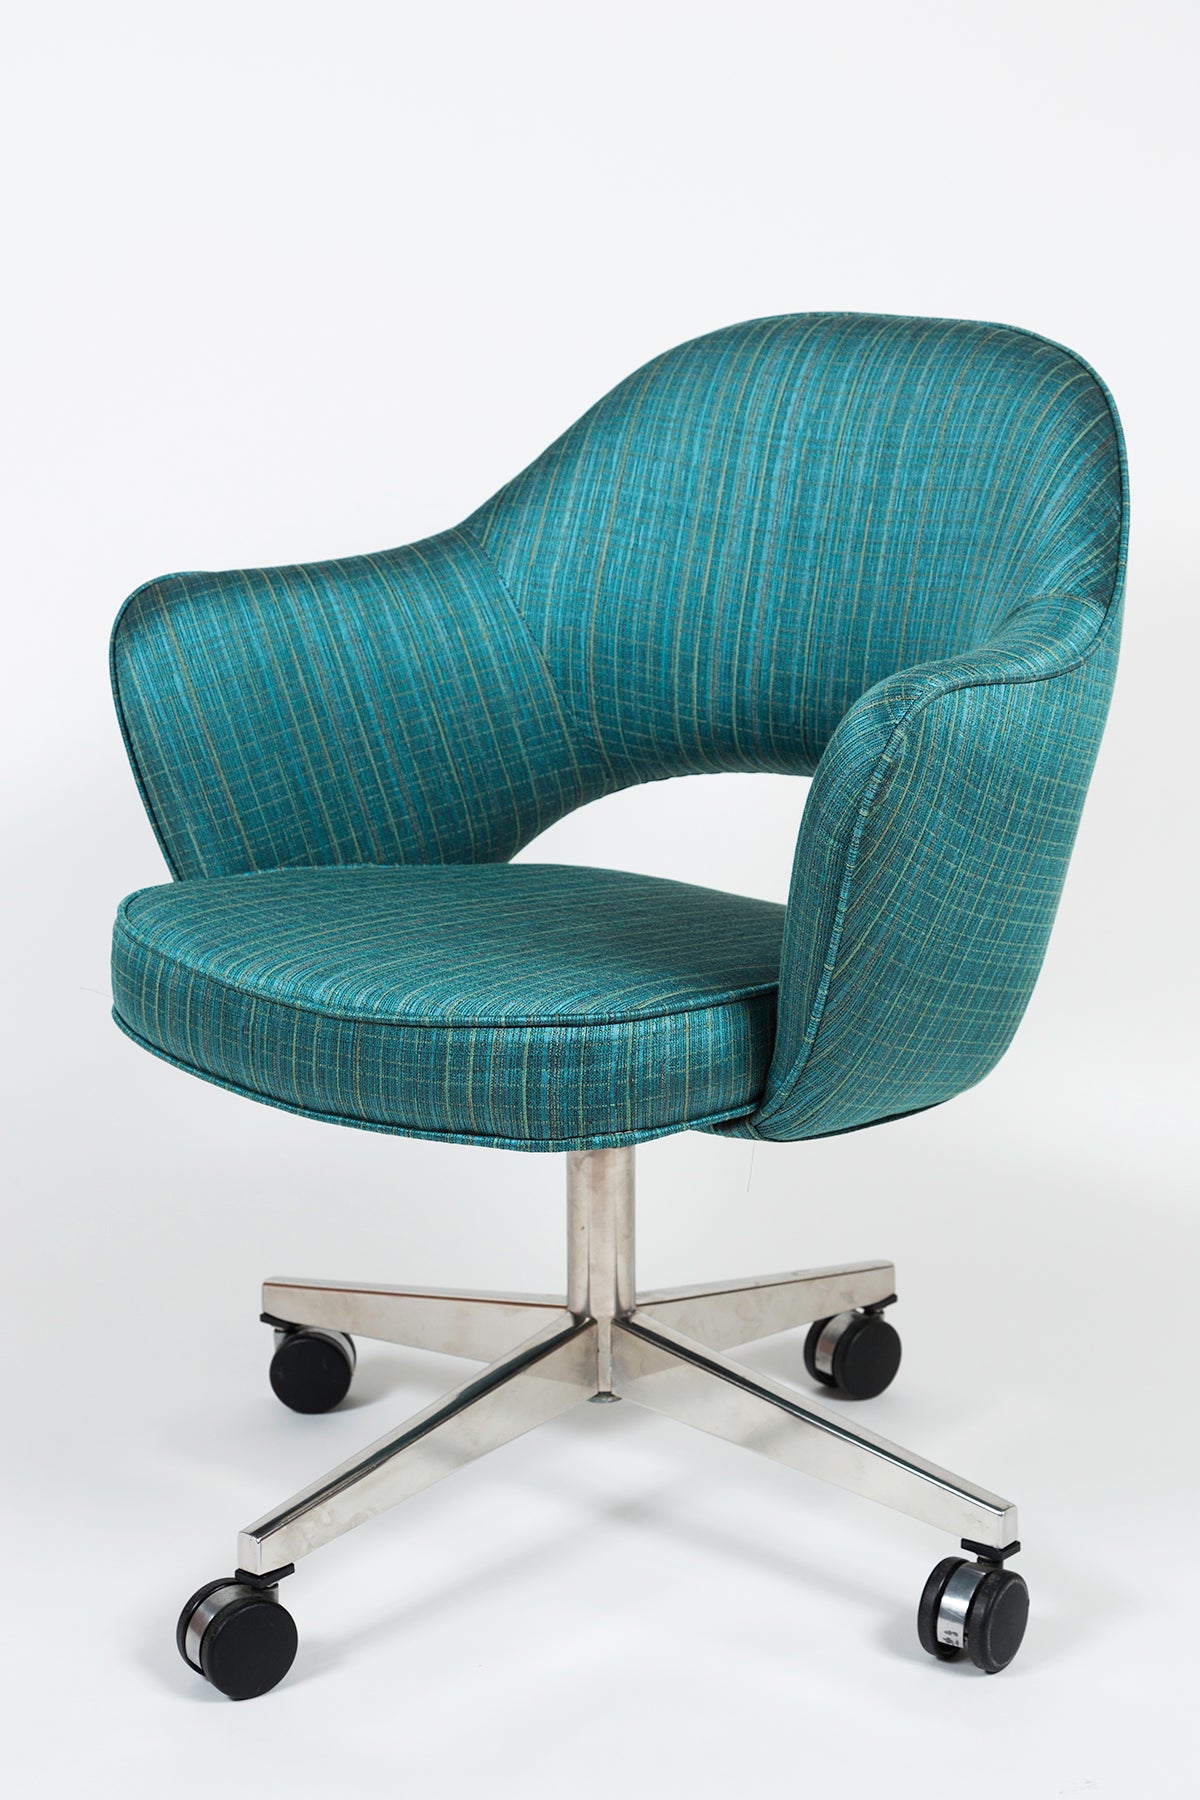 Vintage Eero Saarinen Executive Swivel Chair reupholstered - Vintage Modern Kollectiv